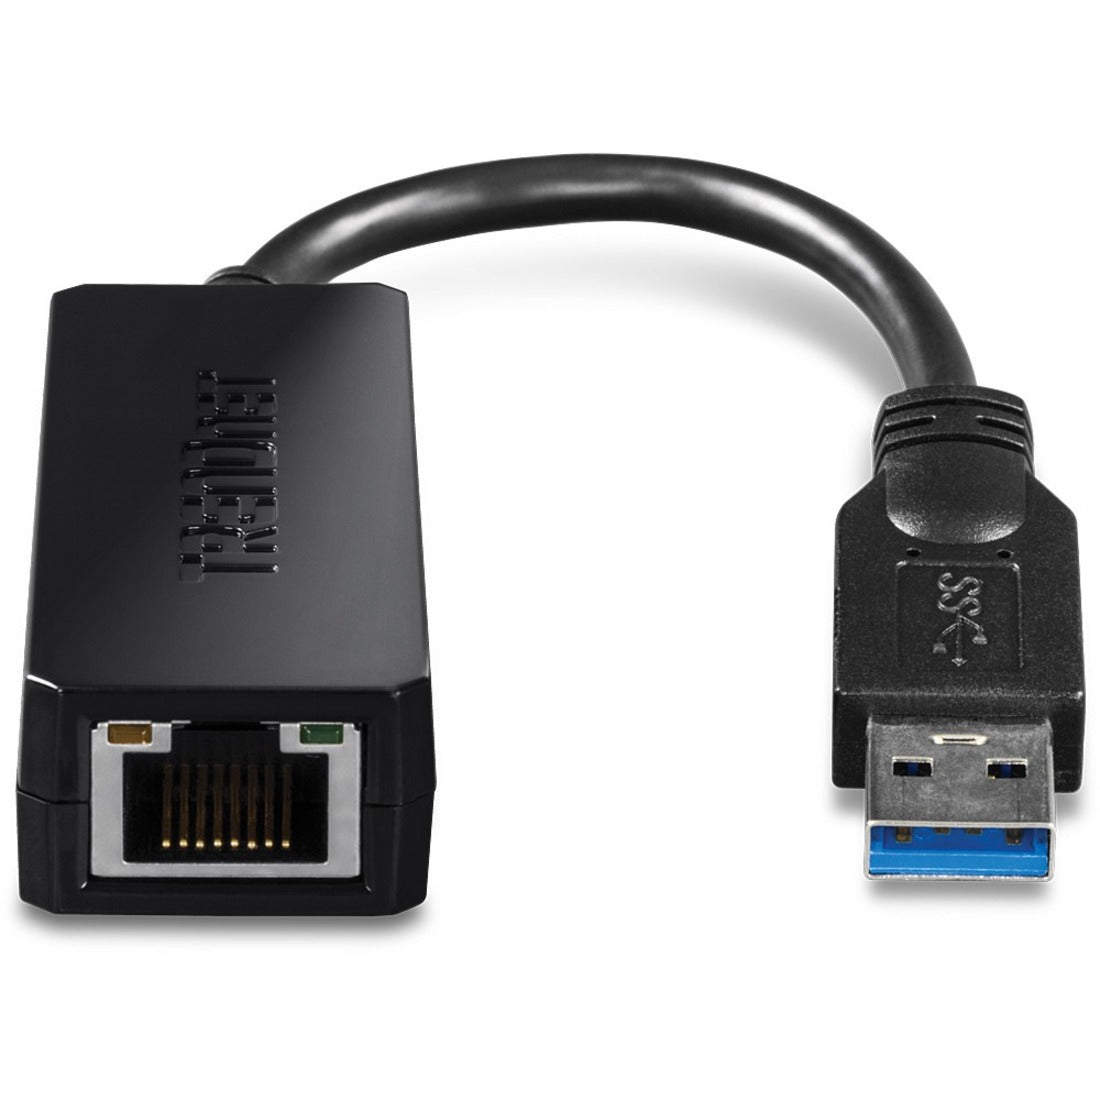 TRENDnet TU3-ETG USB 3.0 to Gigabit Ethernet Adapter, 2 Year Warranty, Mac/PC Compatible